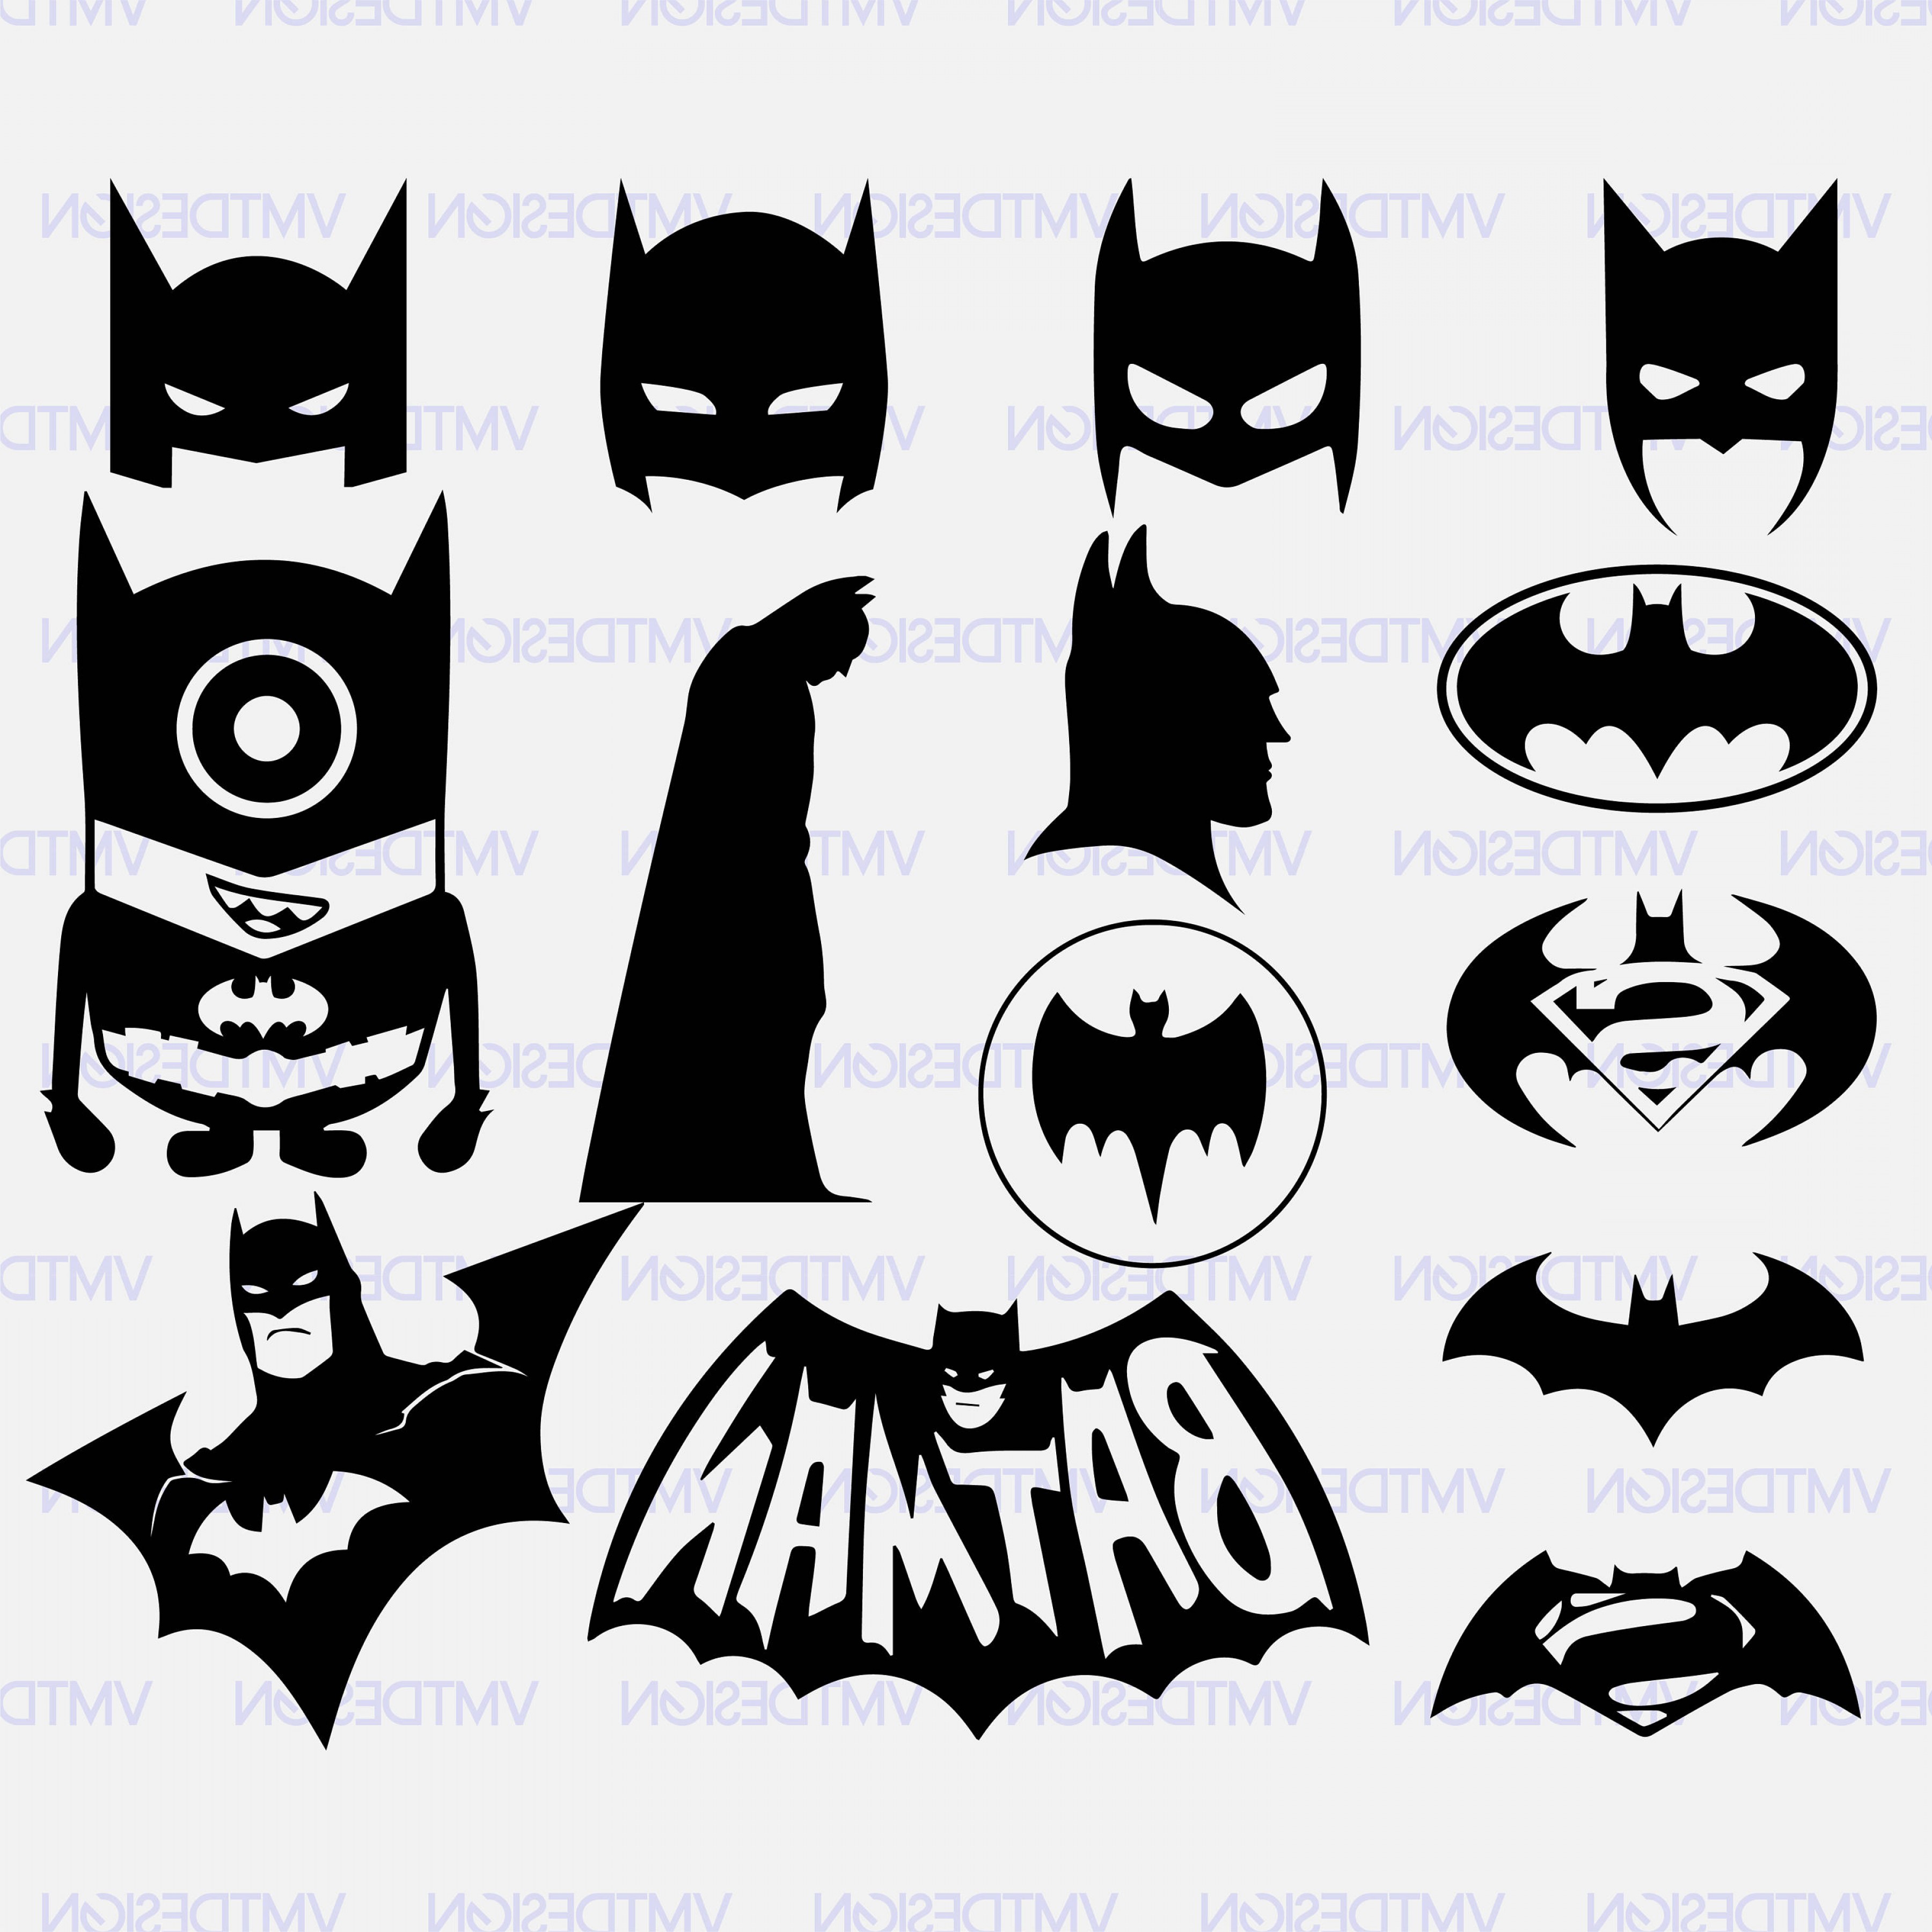 Batman Vector at Vectorified.com | Collection of Batman Vector free for ...